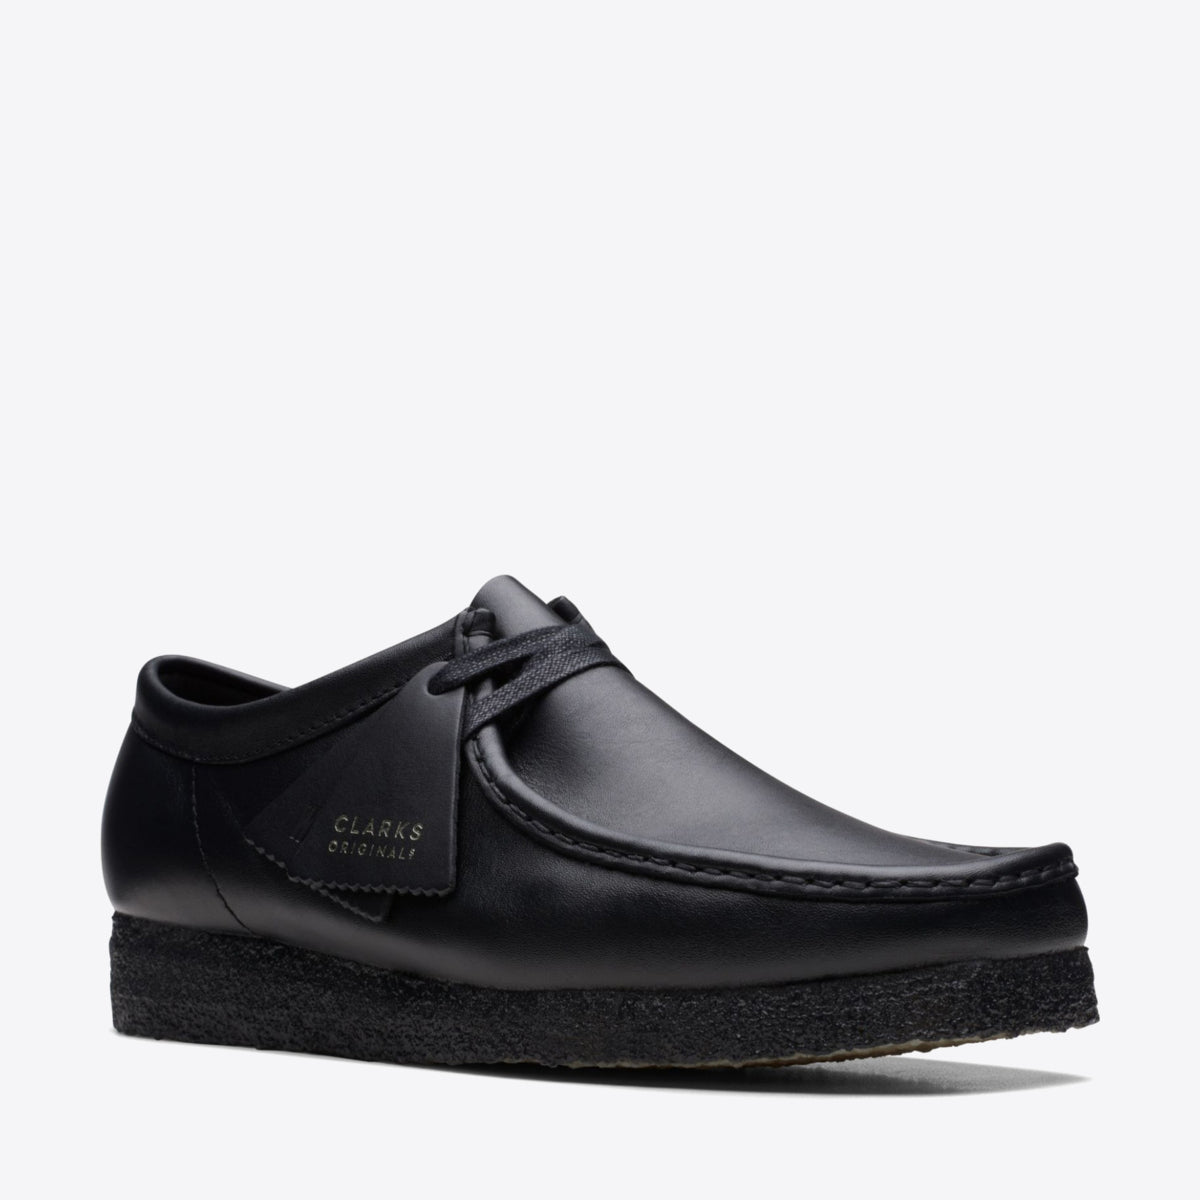 CLARKS Wallabee Shoe Leather Black - Image 2